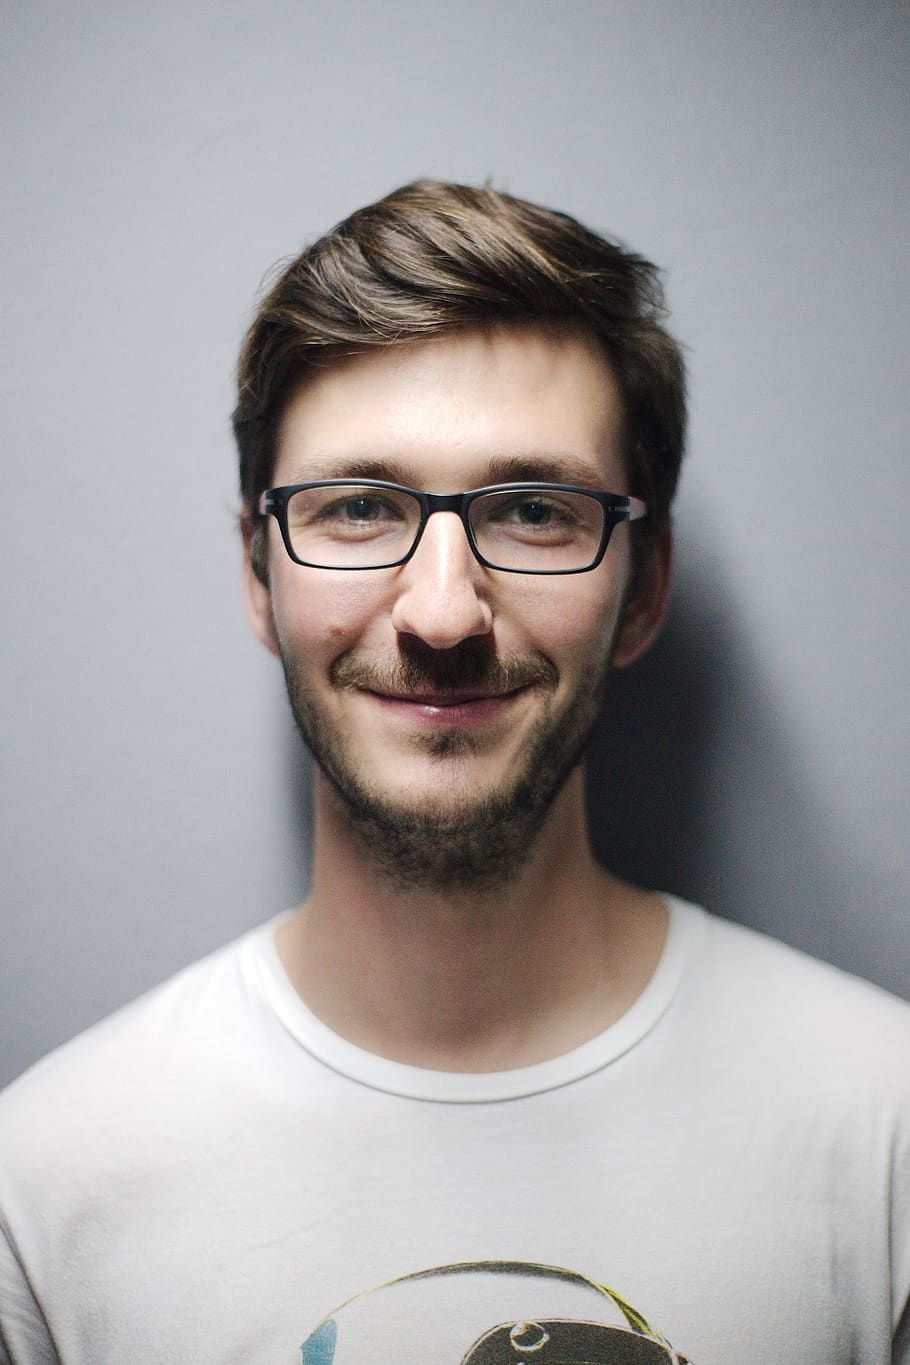 Man Smiling Behind Wall, adult, boy, casual, close-up, eyeglasses